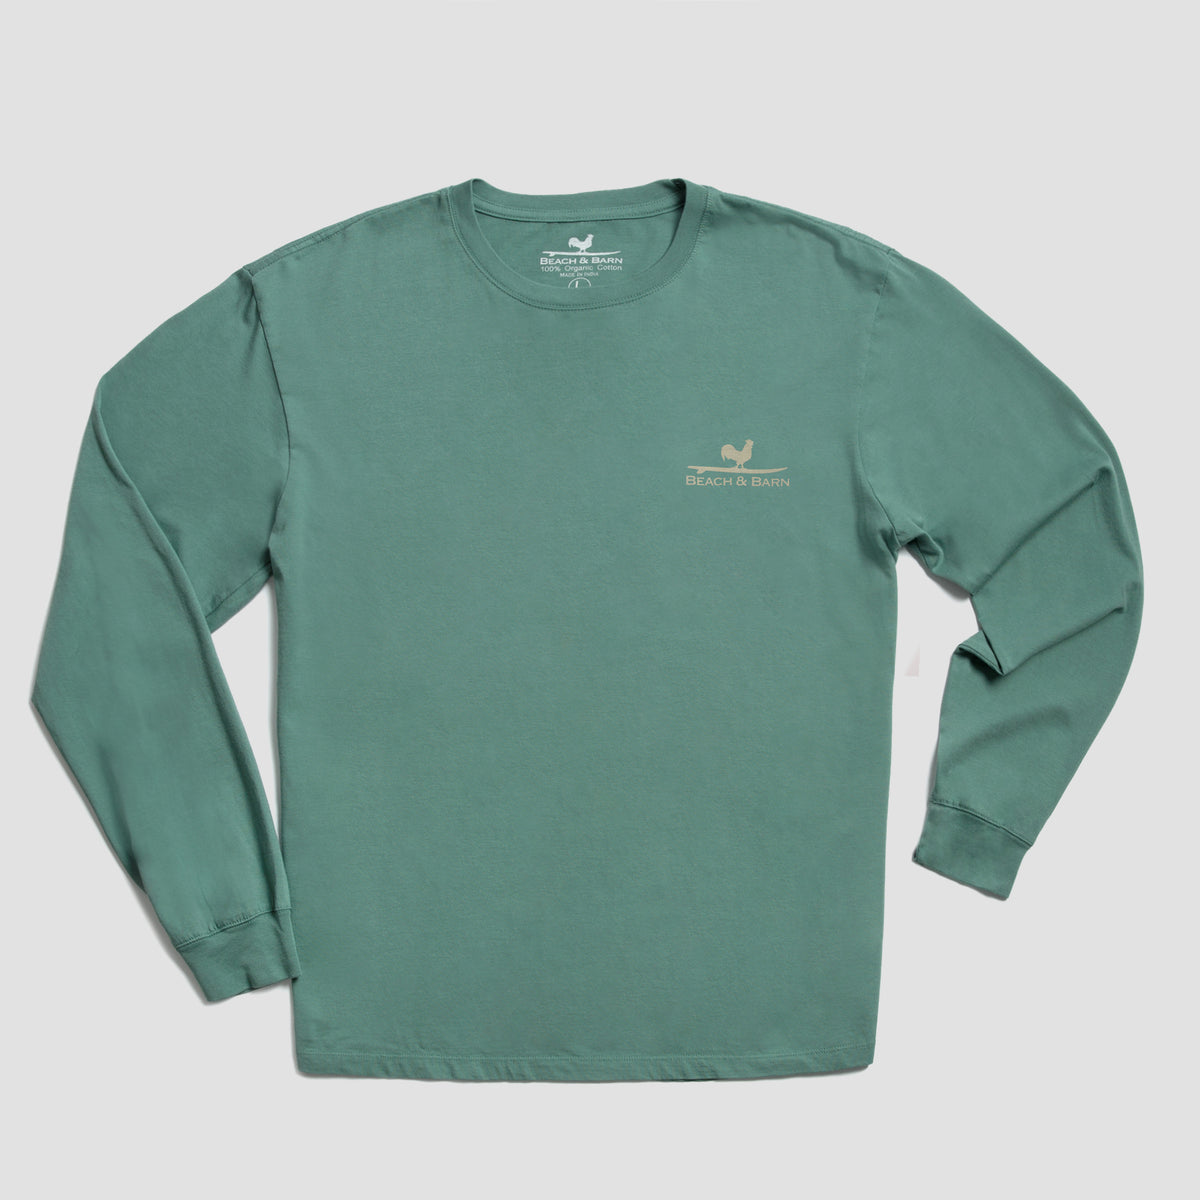 Coastal County Line Long Sleeve Tee Shirt